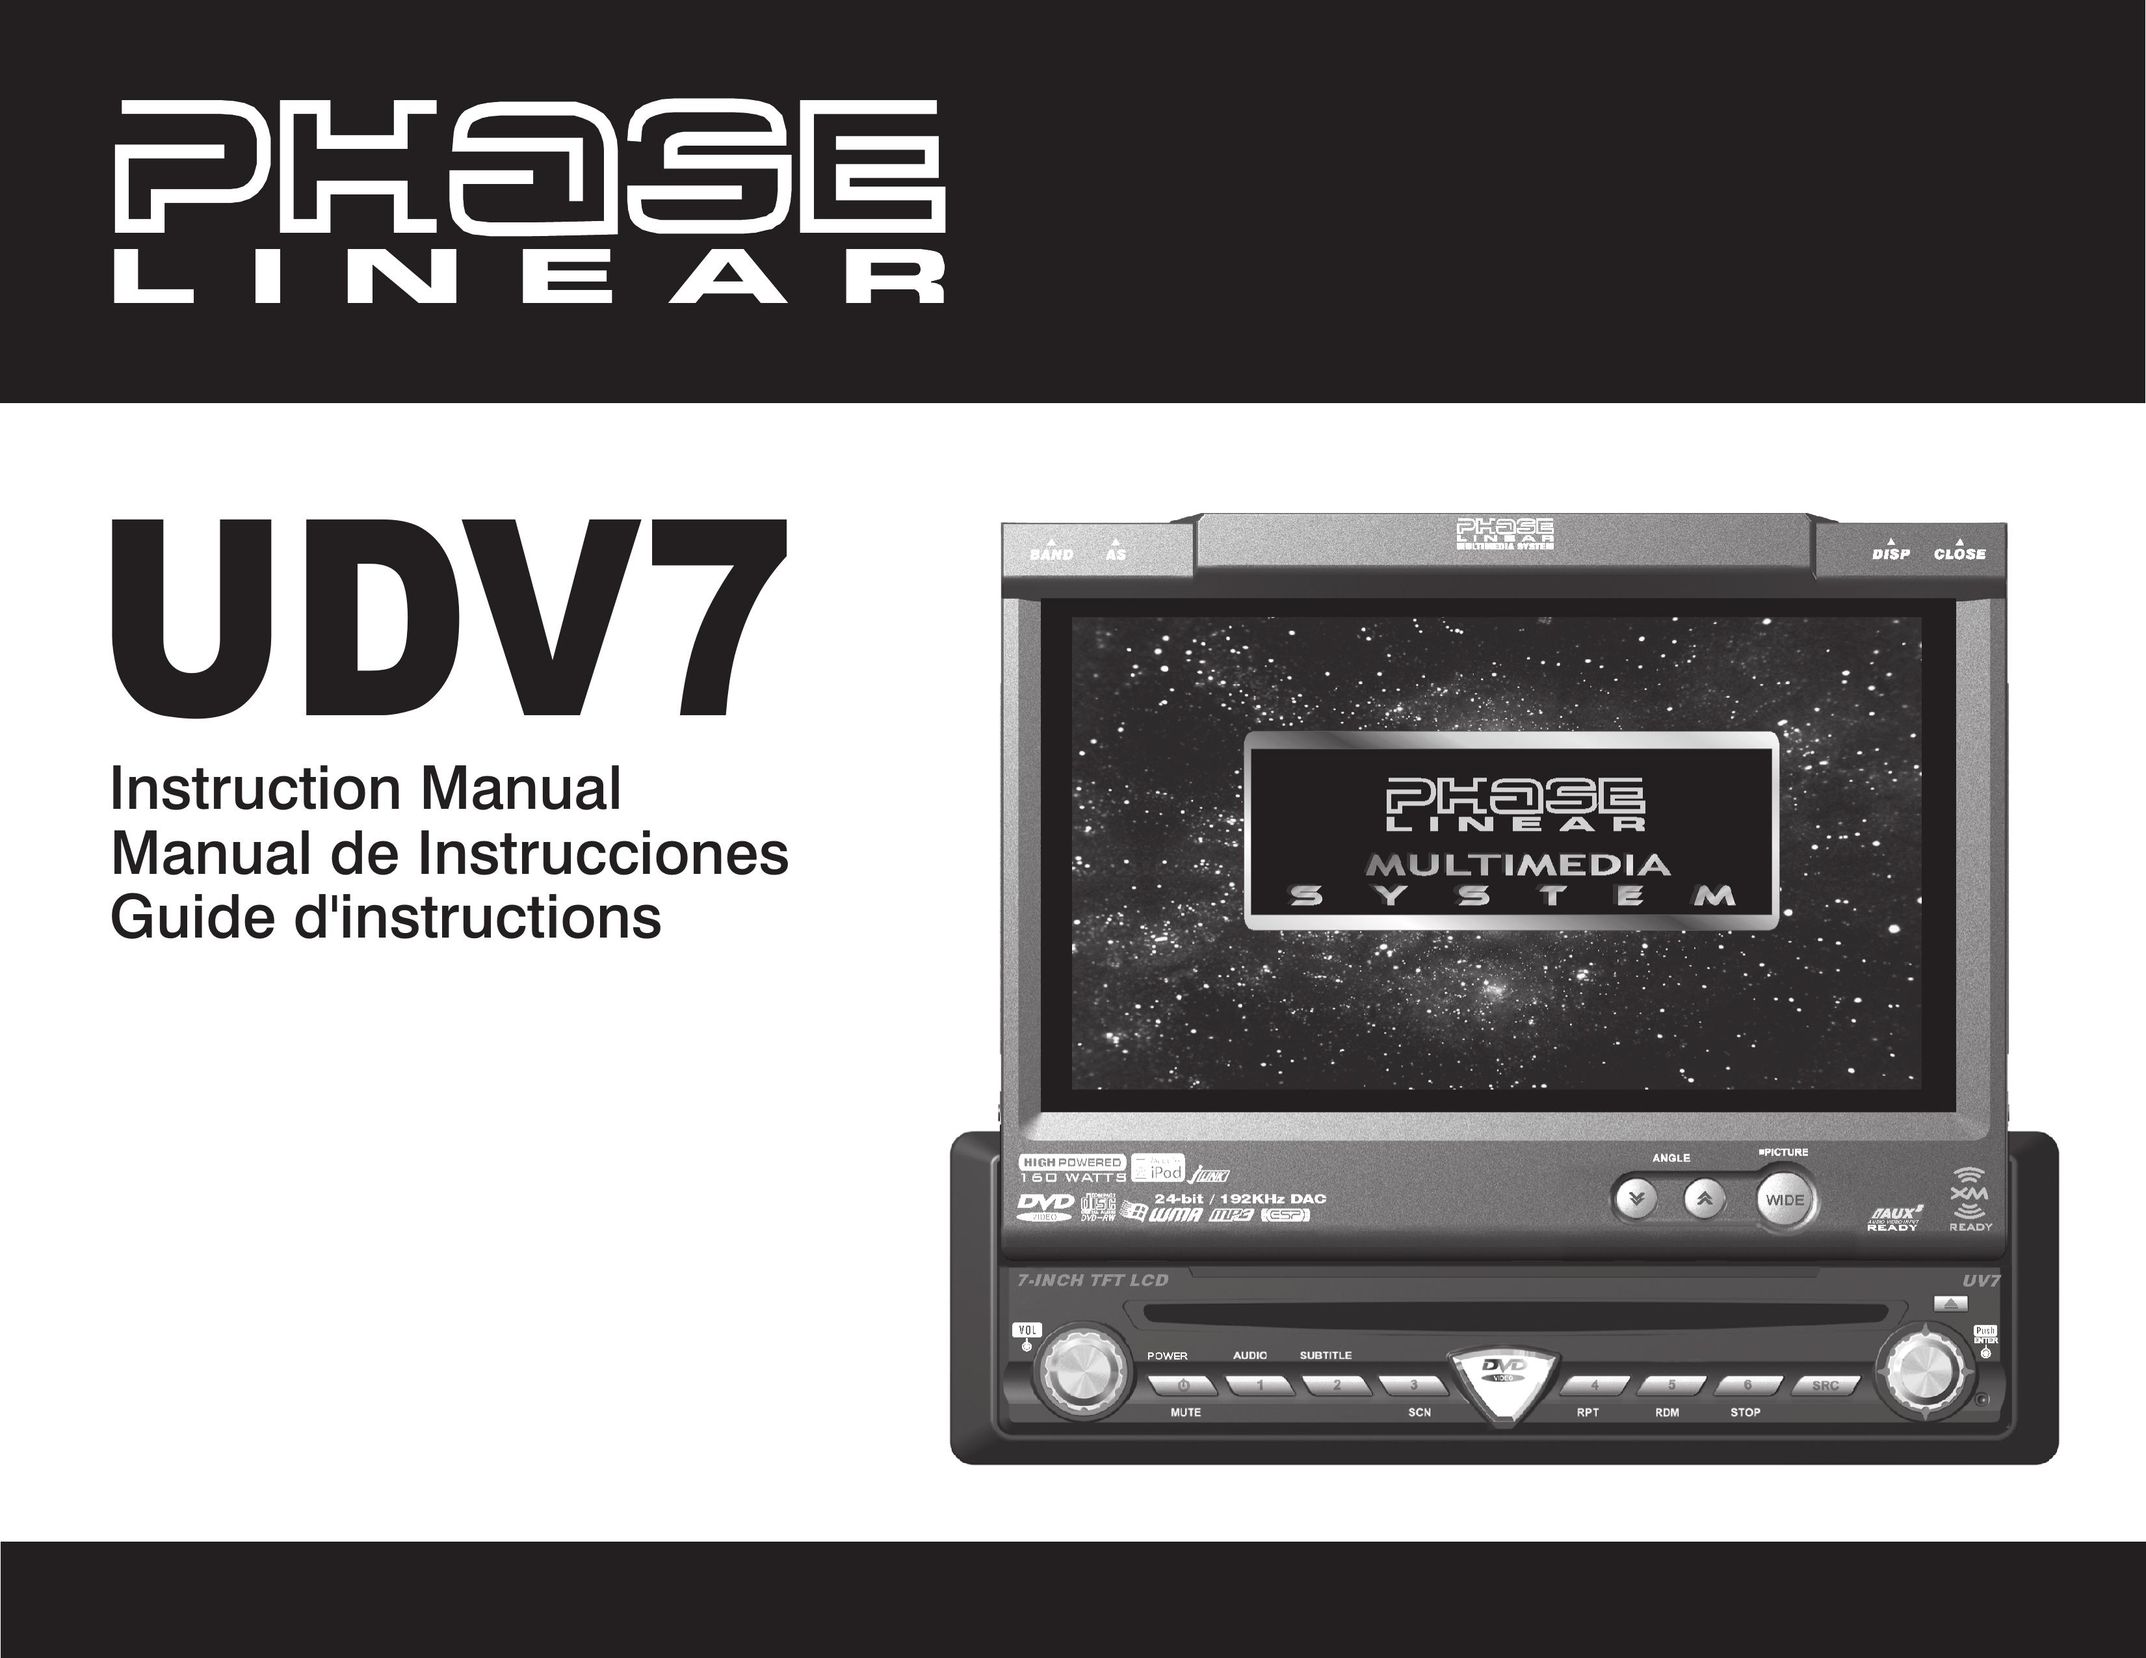 Audiovox UDV7 Portable Multimedia Player User Manual